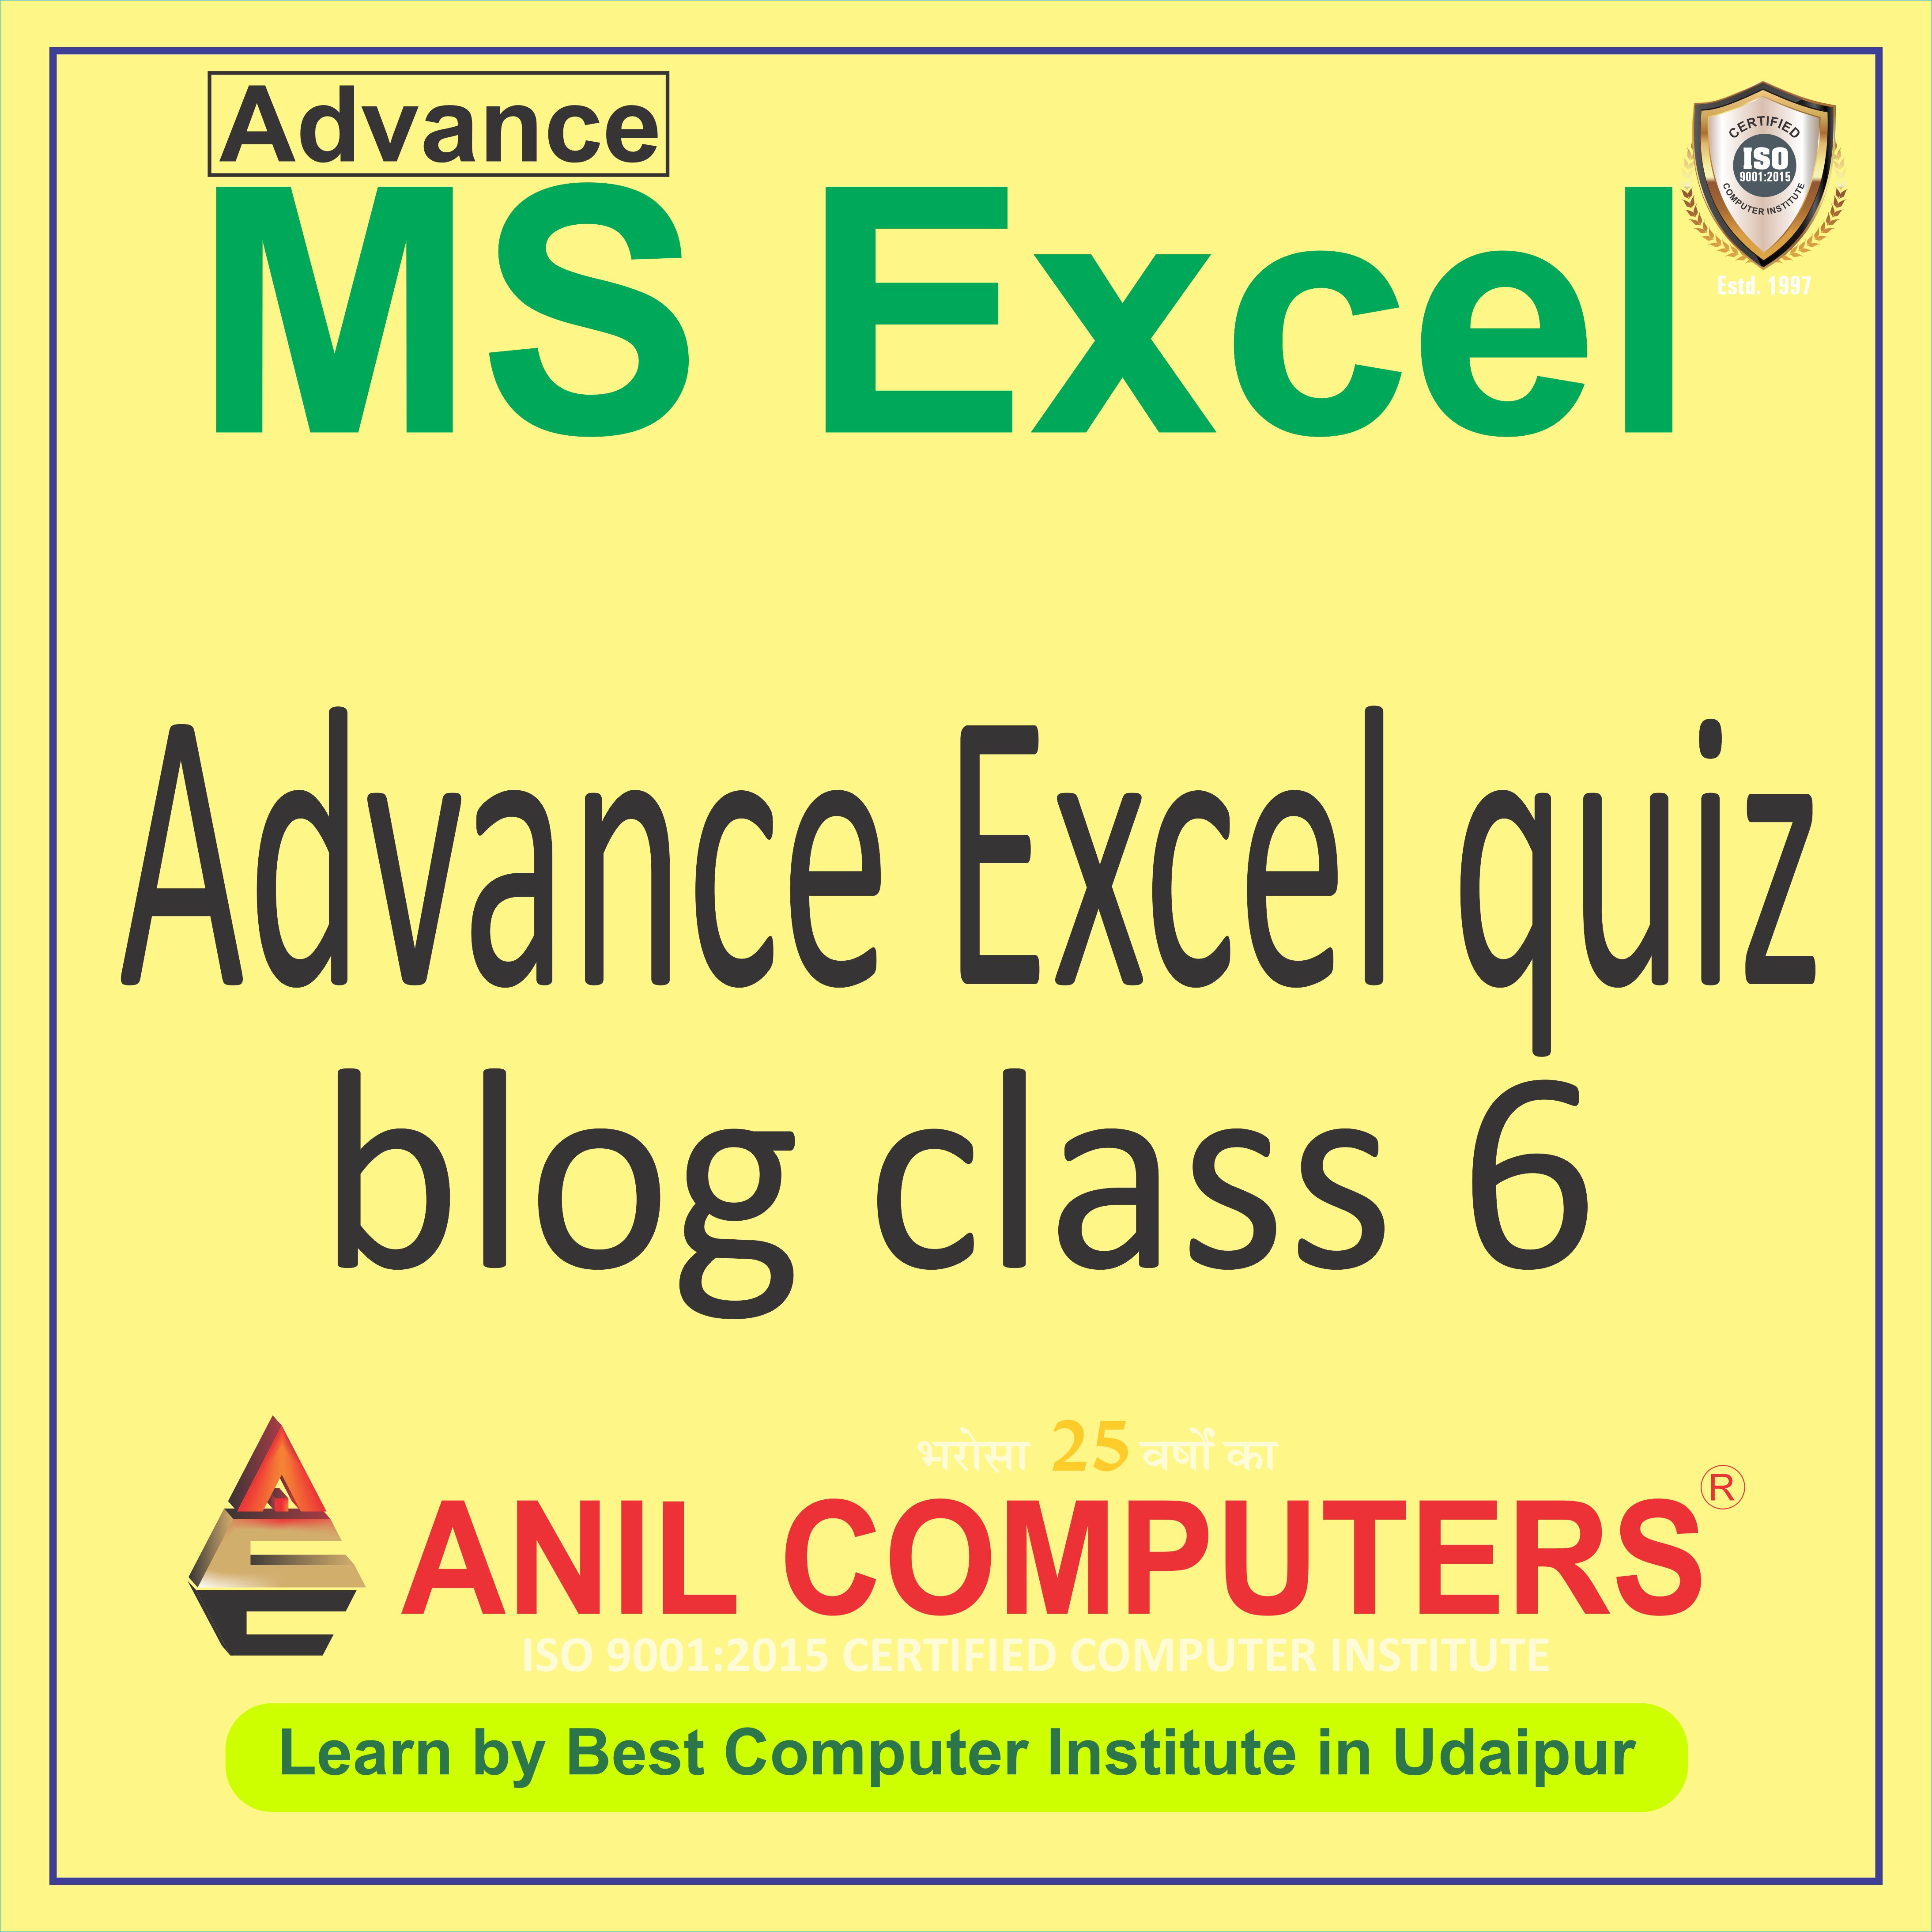 Advance Excel quiz blog class 6